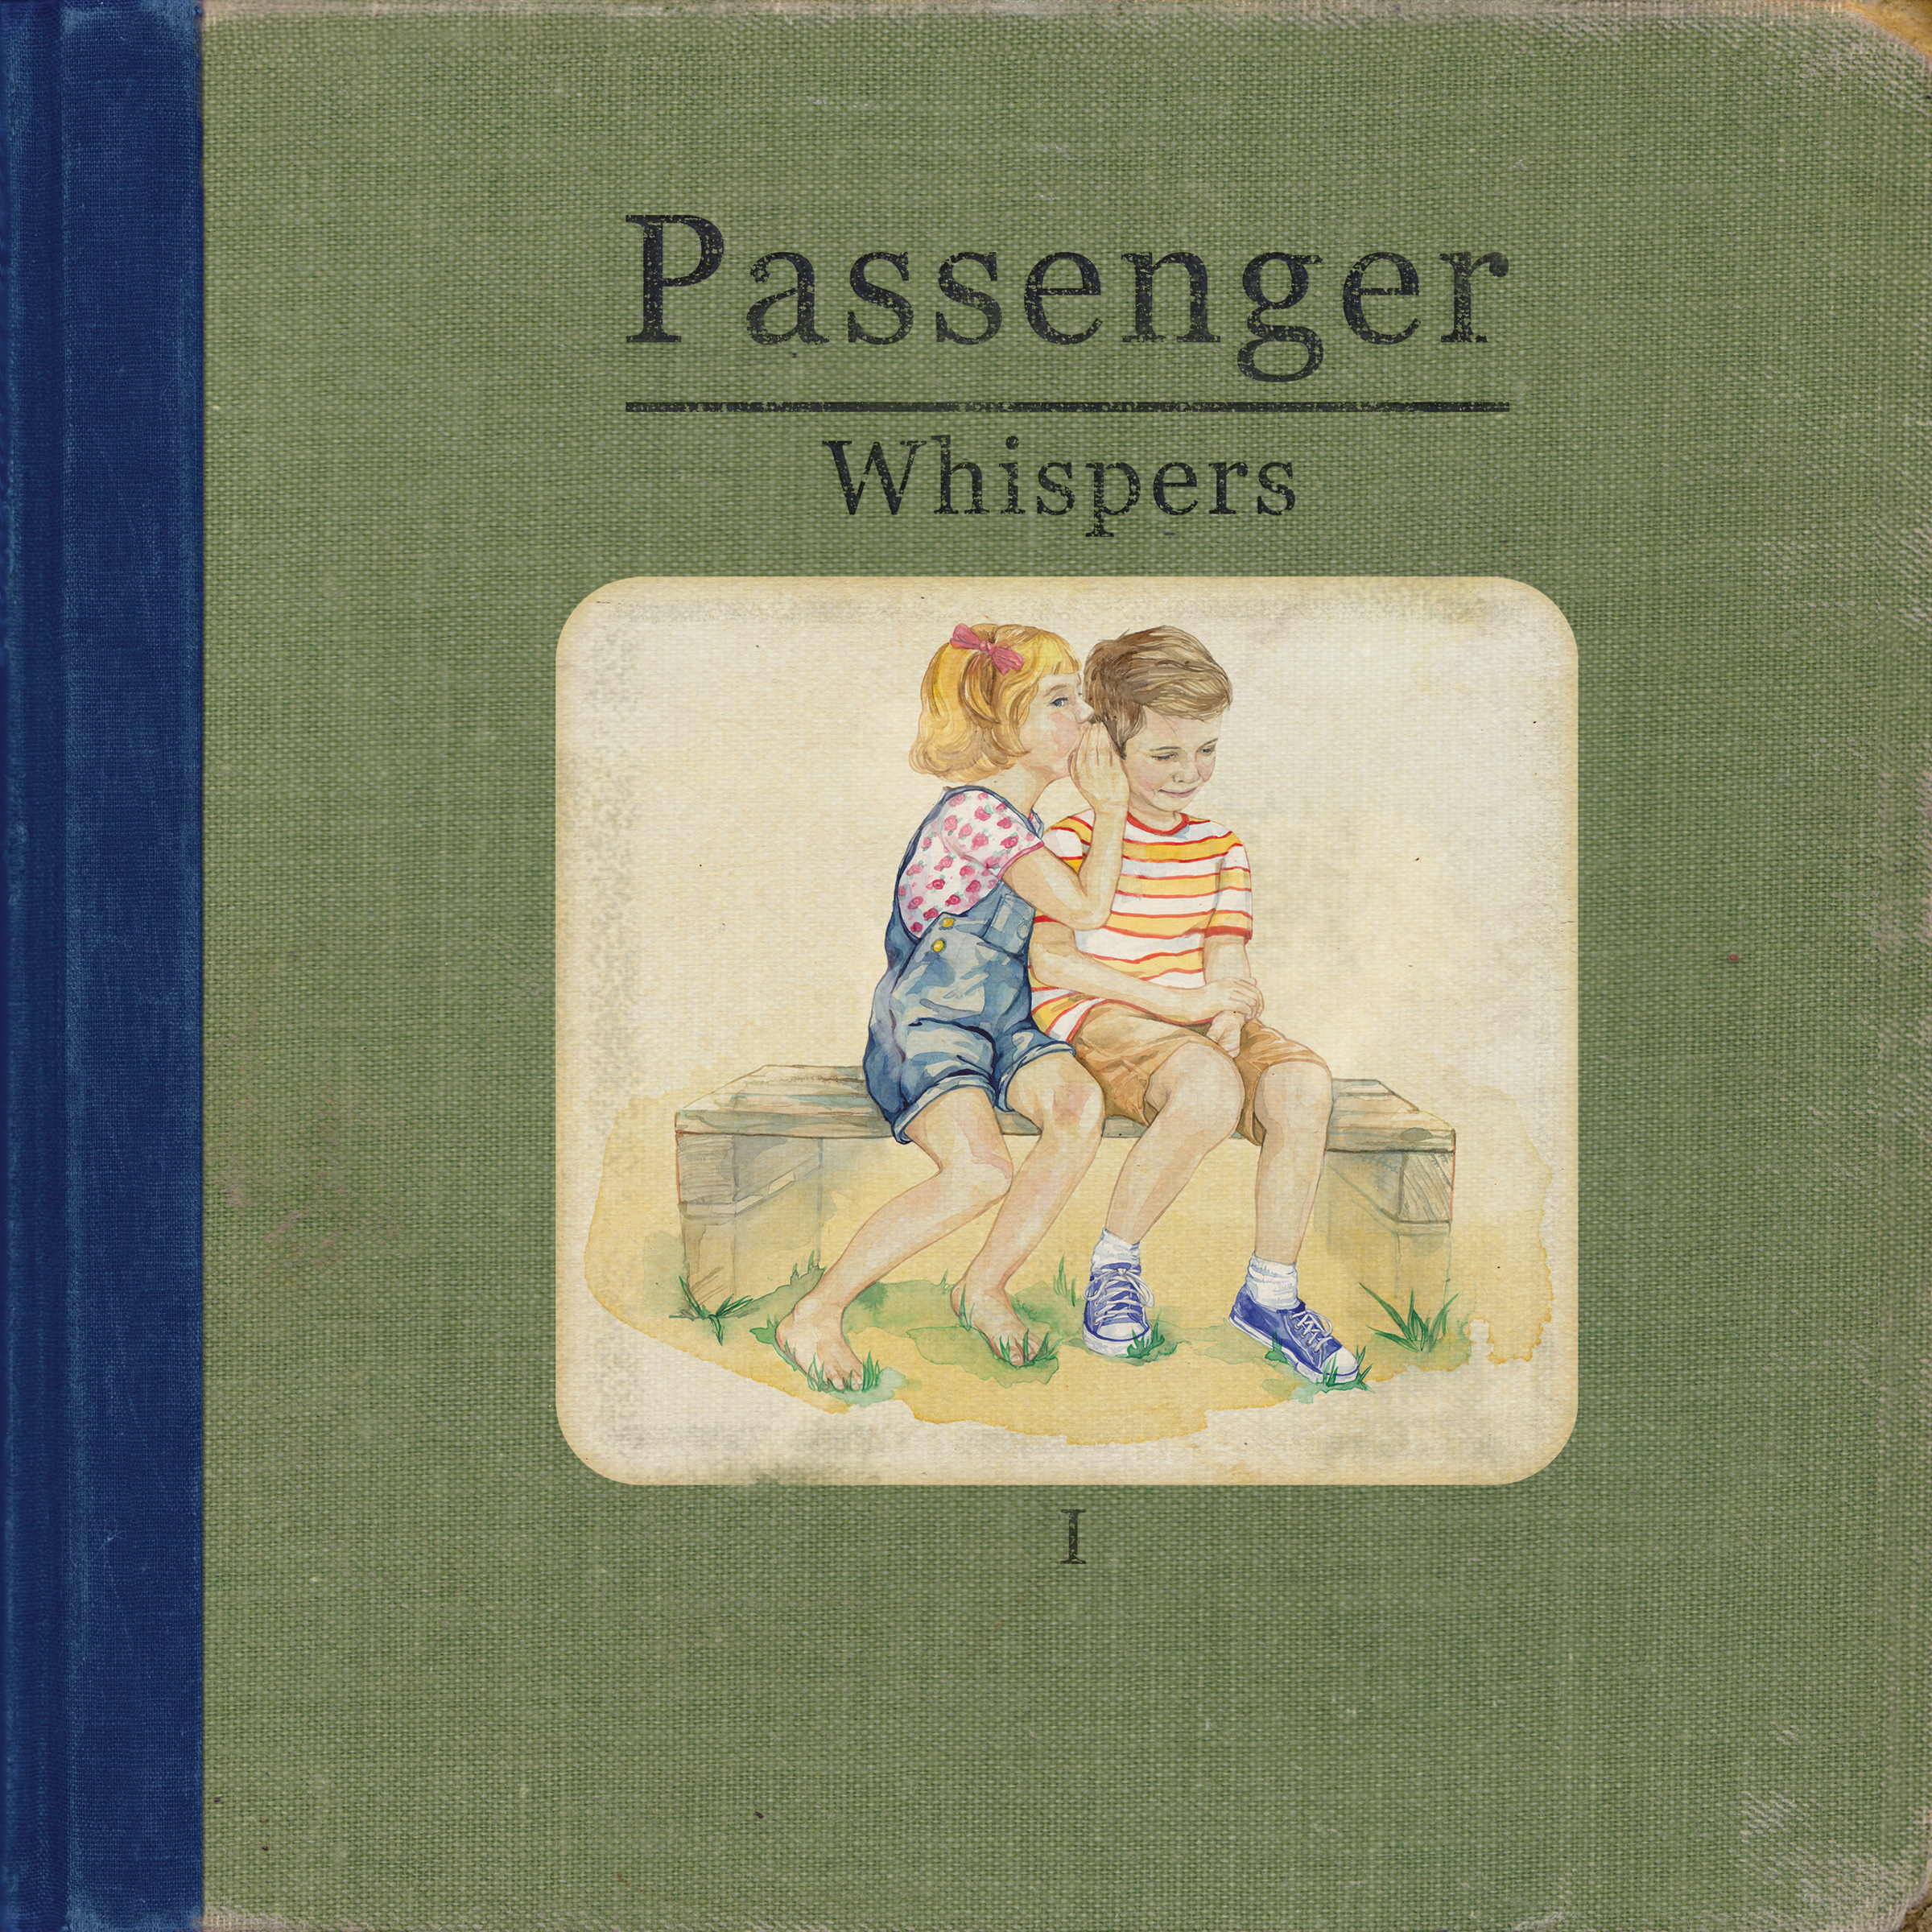 Whispers Passenger Edition) (CD) - - (Deluxe